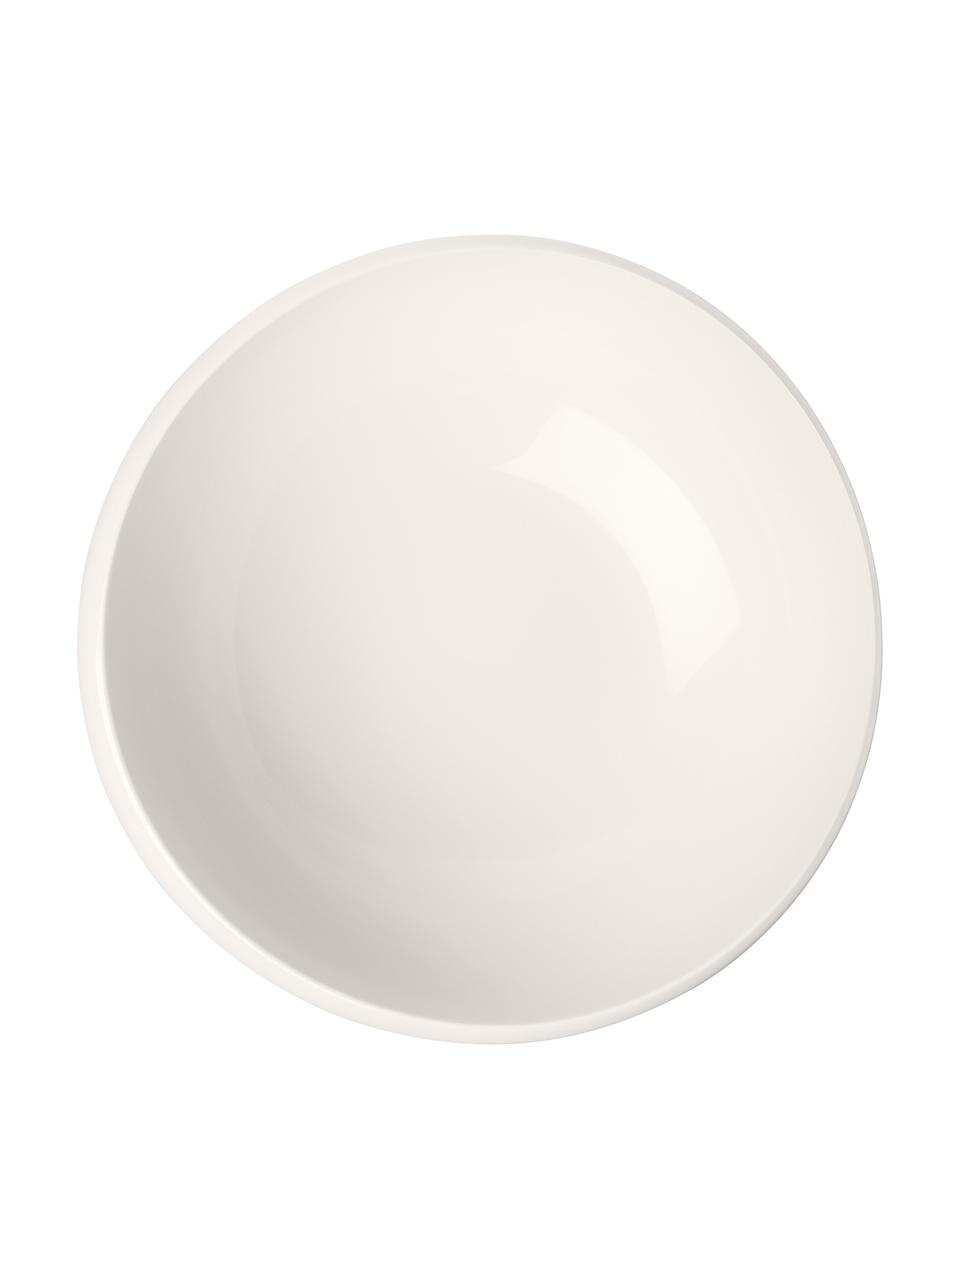 Ciotola in porcellana bianca New Moon, Ø 29 cm, Porcellana, Bianco, Ø 29 x Alt. 10 cm